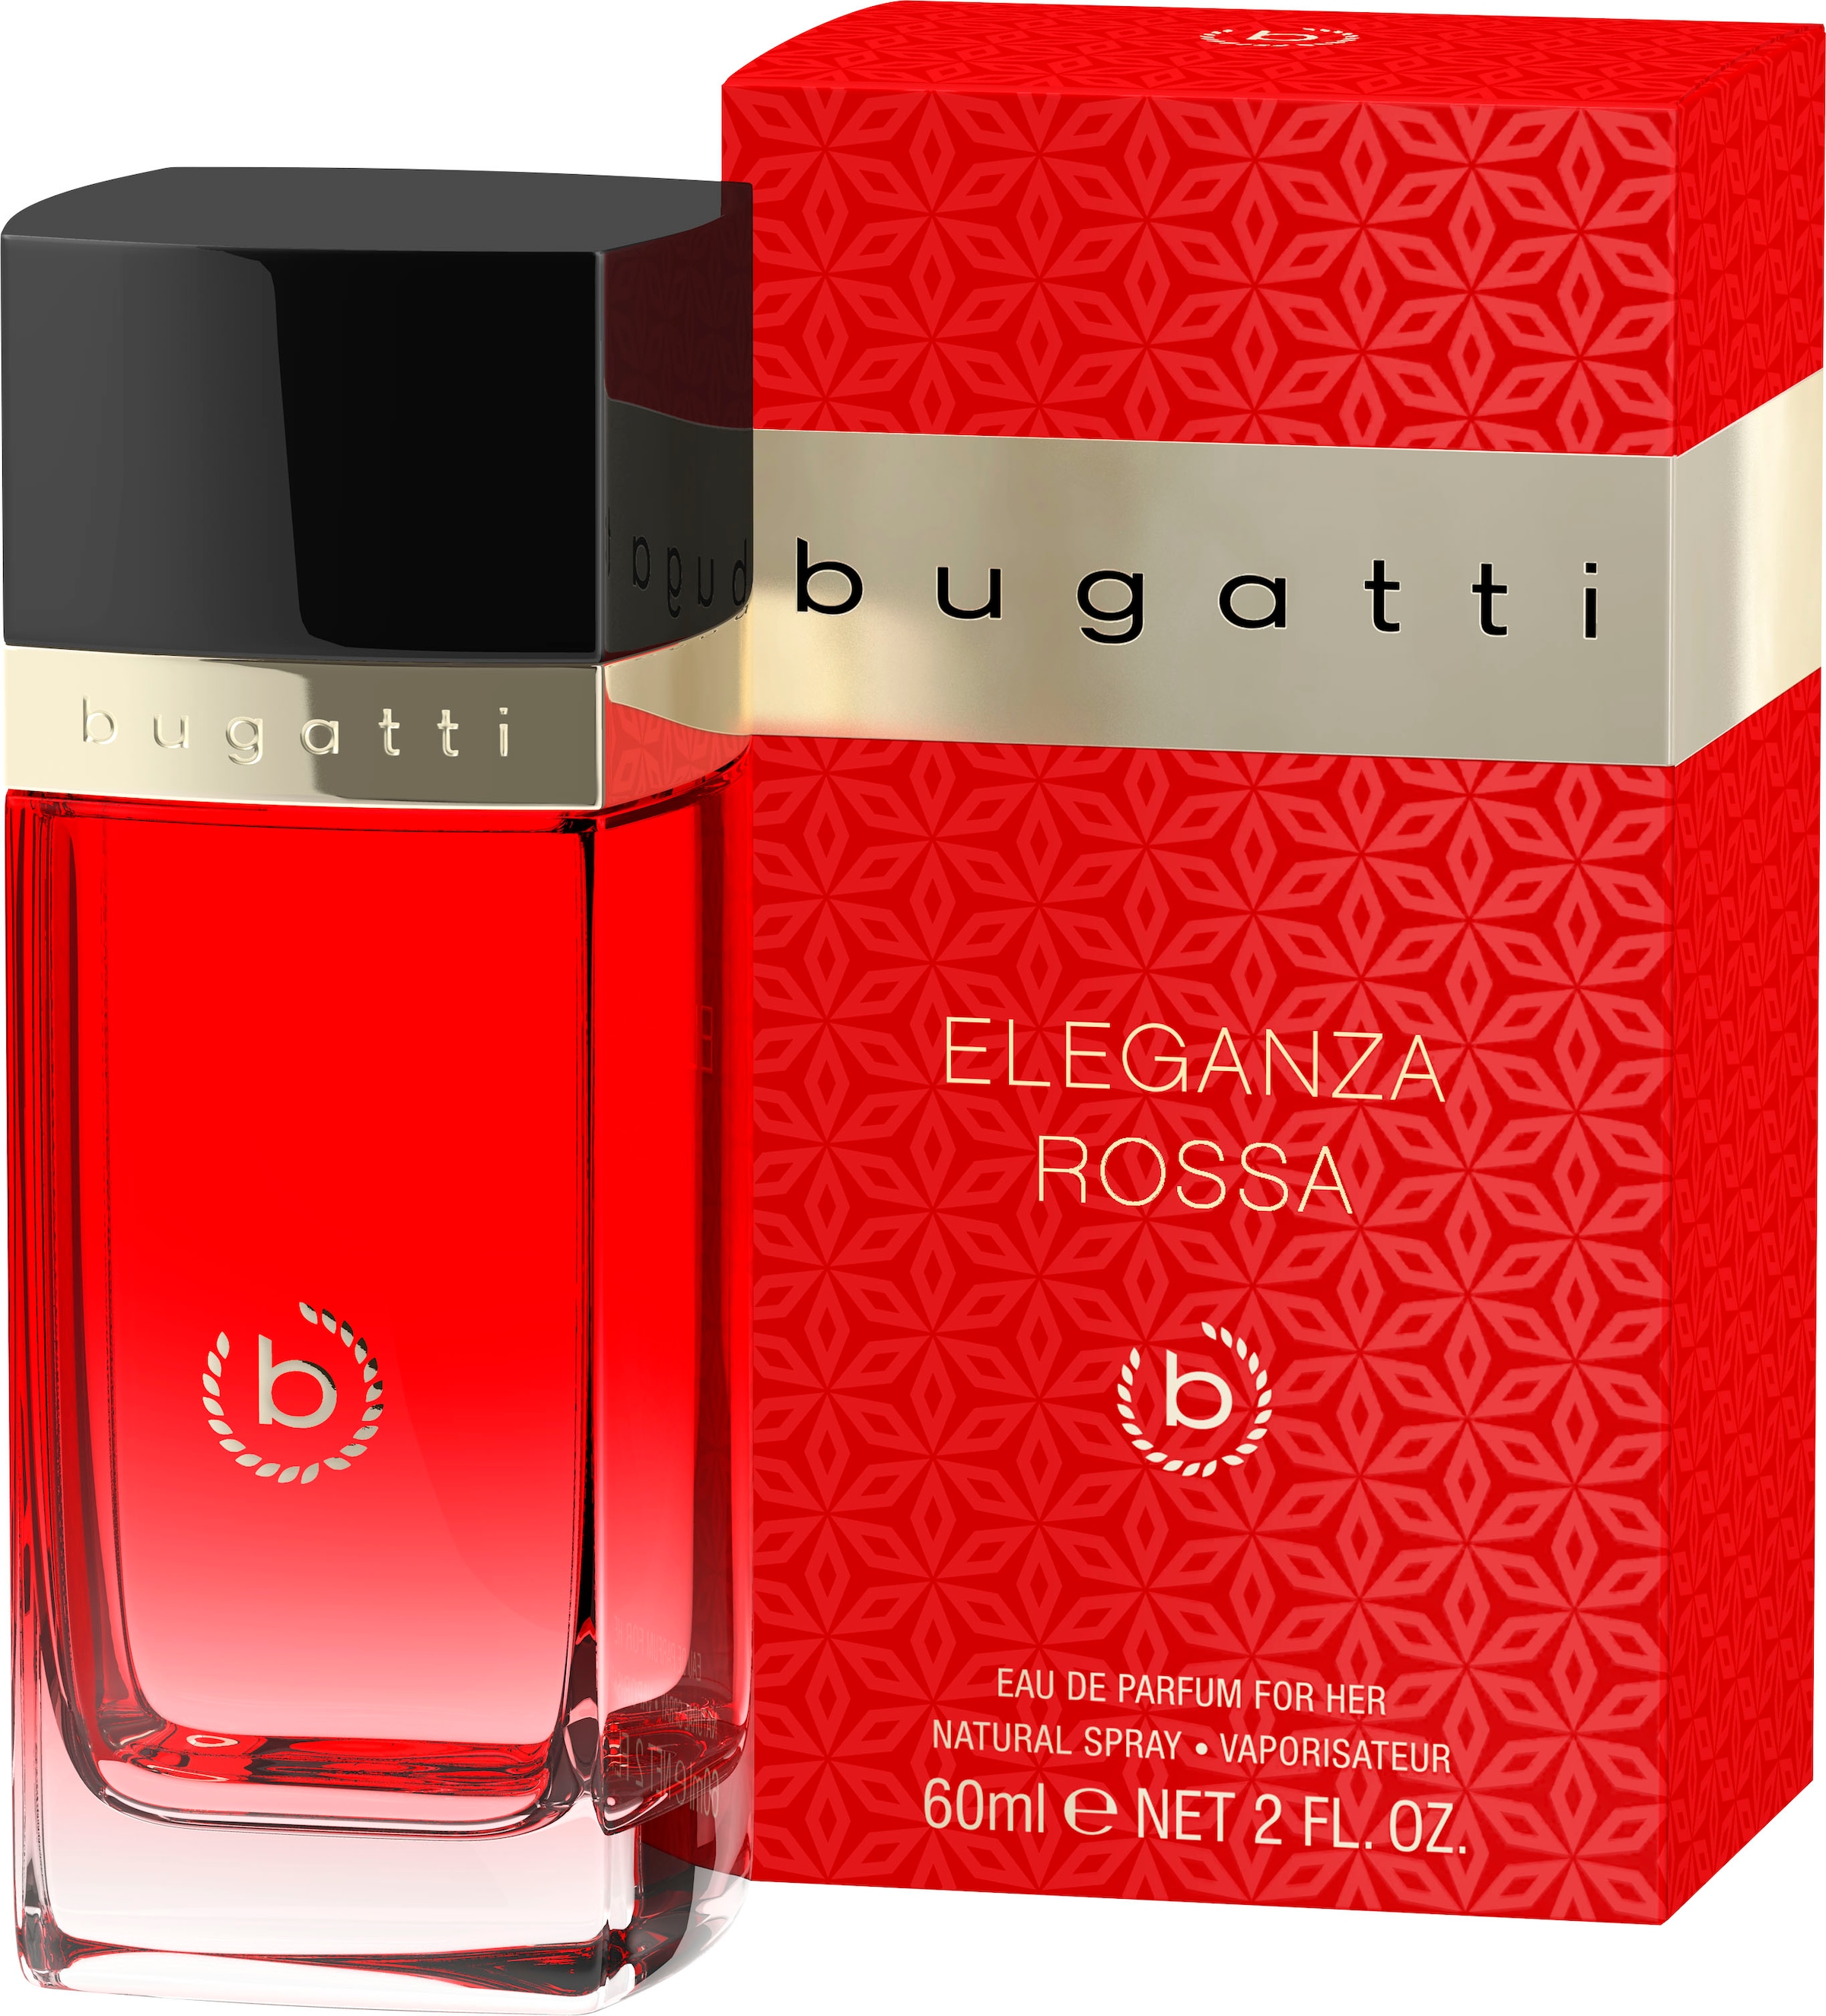 bugatti Eau de Parfum »BUGATTI | ml« UNIVERSAL Eleganza kaufen for her Rossa EdP 60